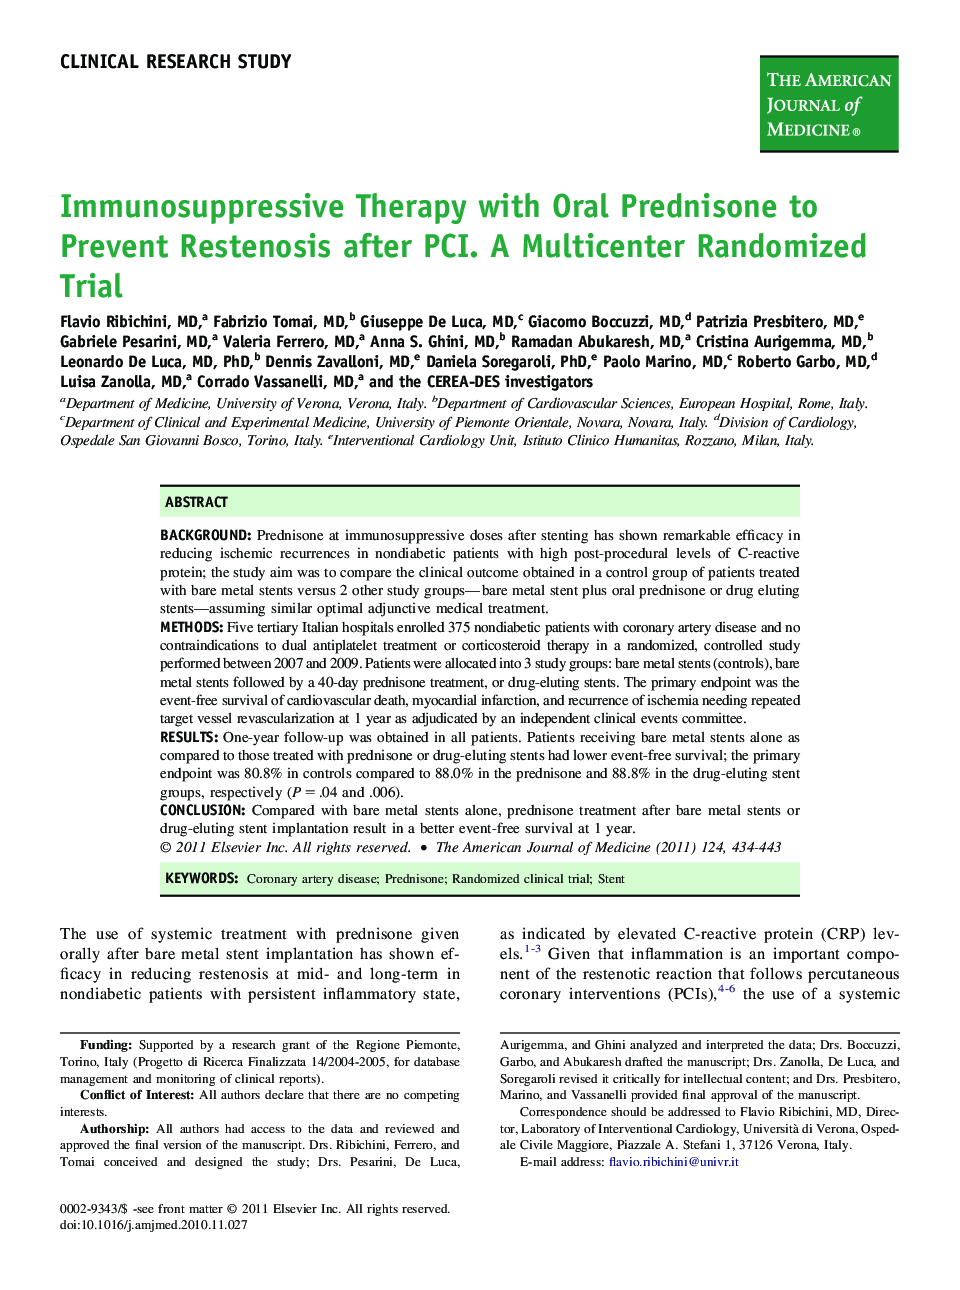 Immunosuppressive Therapy with Oral Prednisone to Prevent Restenosis after PCI. A Multicenter Randomized Trial 